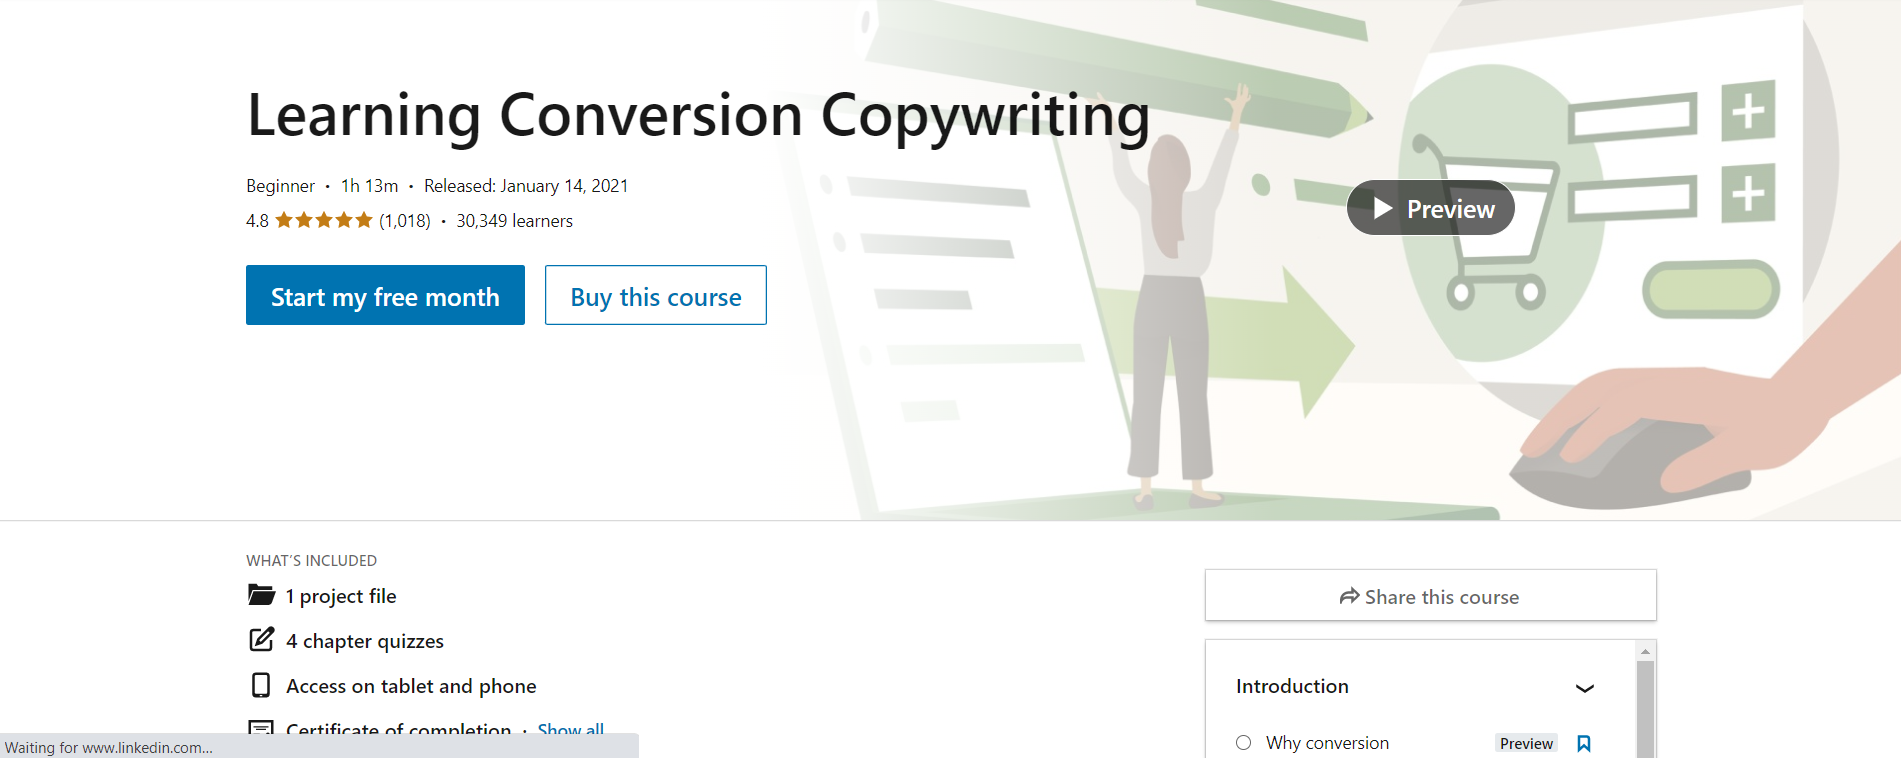 Learning Conversion Copywriting